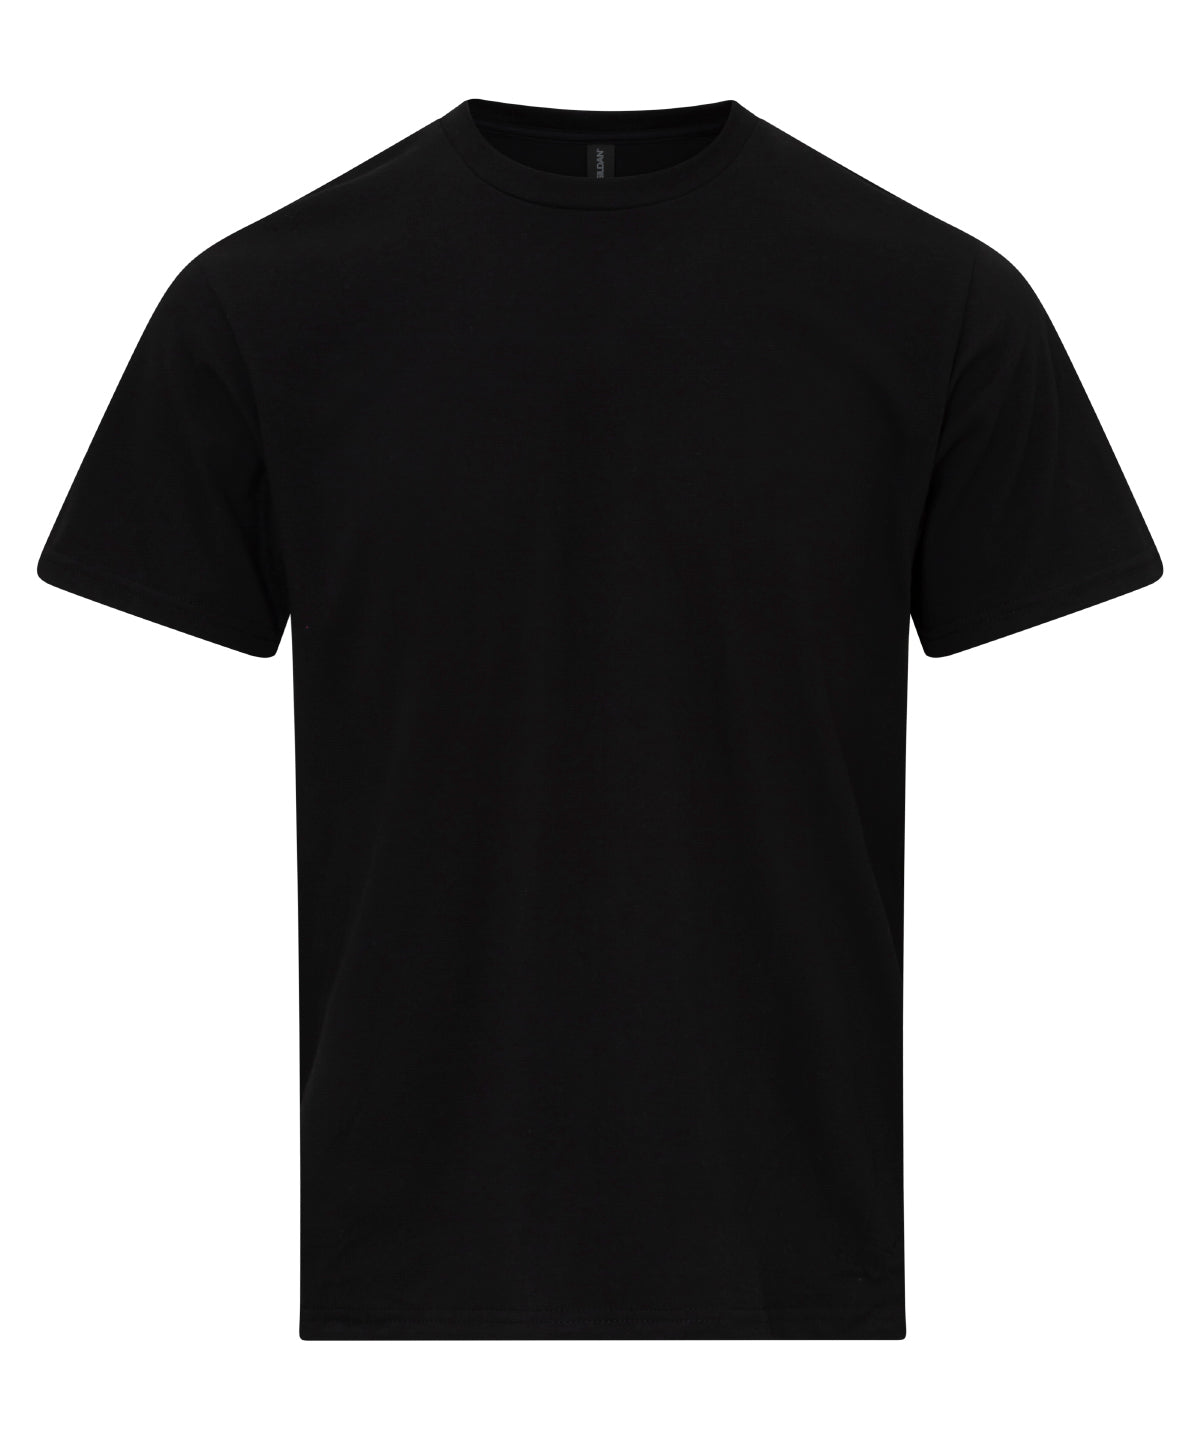 Gildan Softstyle midweight adult t-shirt Pitch Black